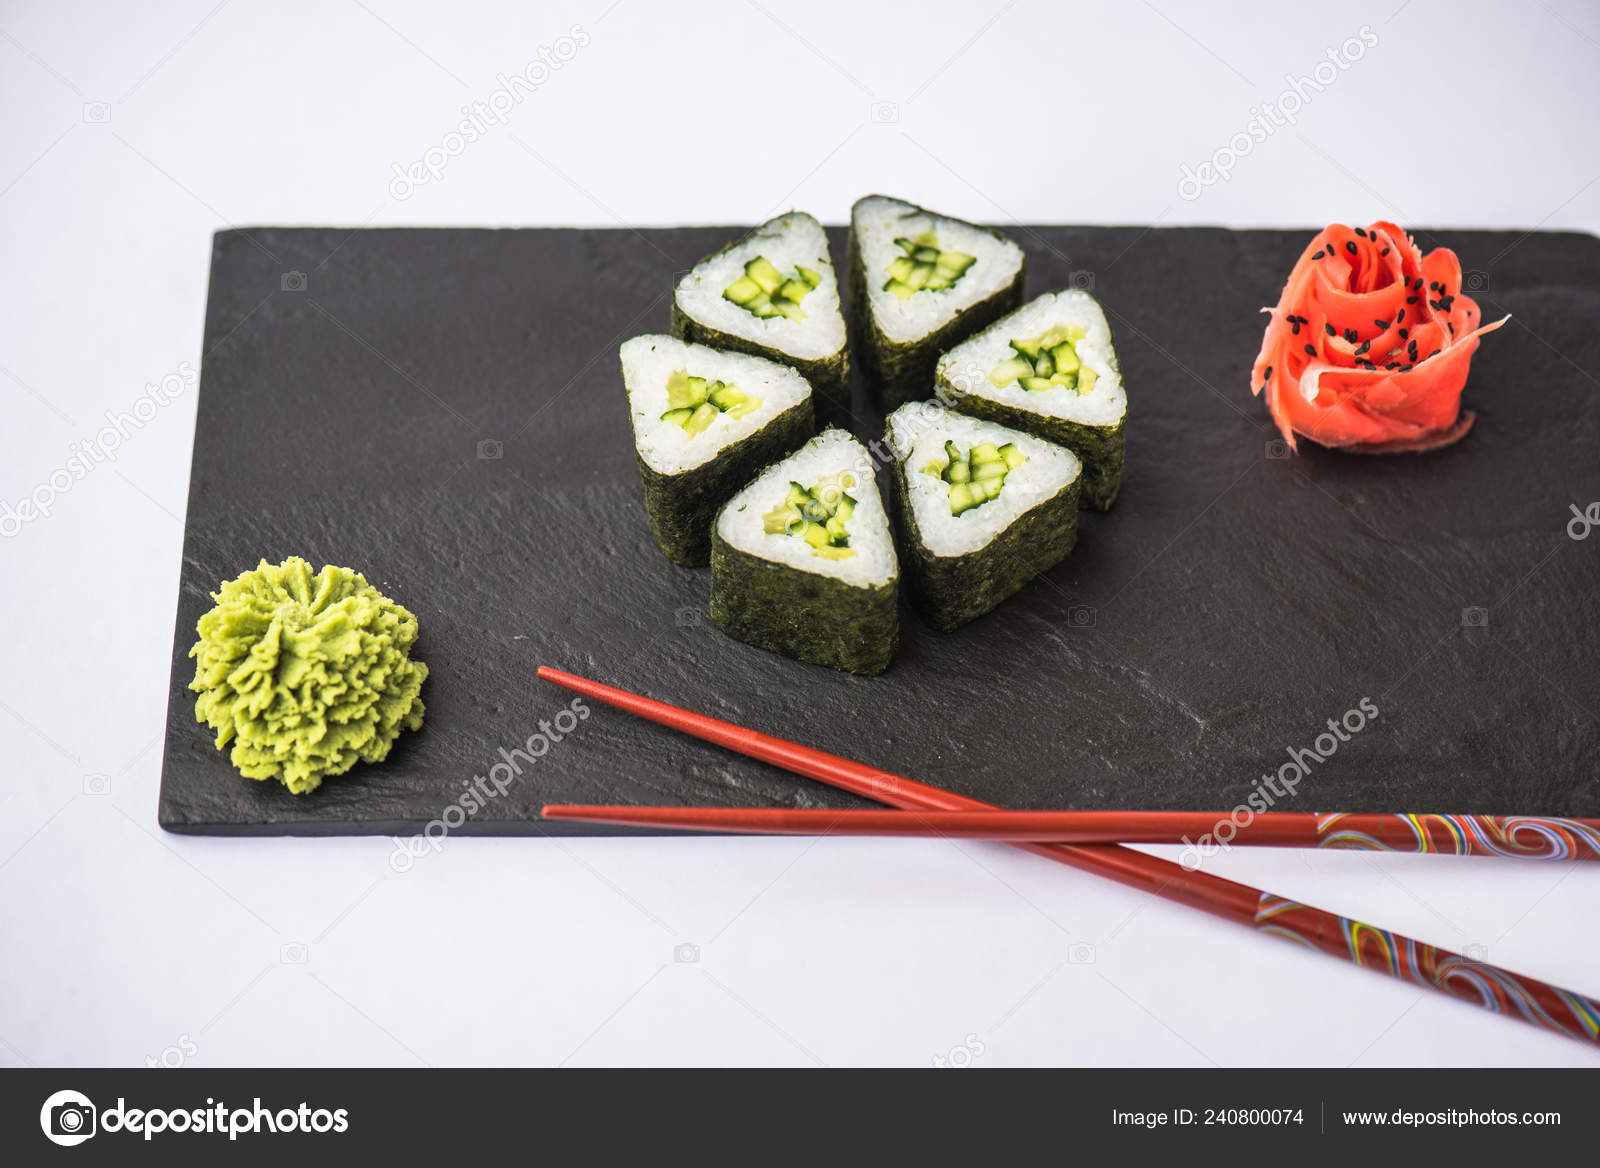 Sushi Board with Optional Chopsticks